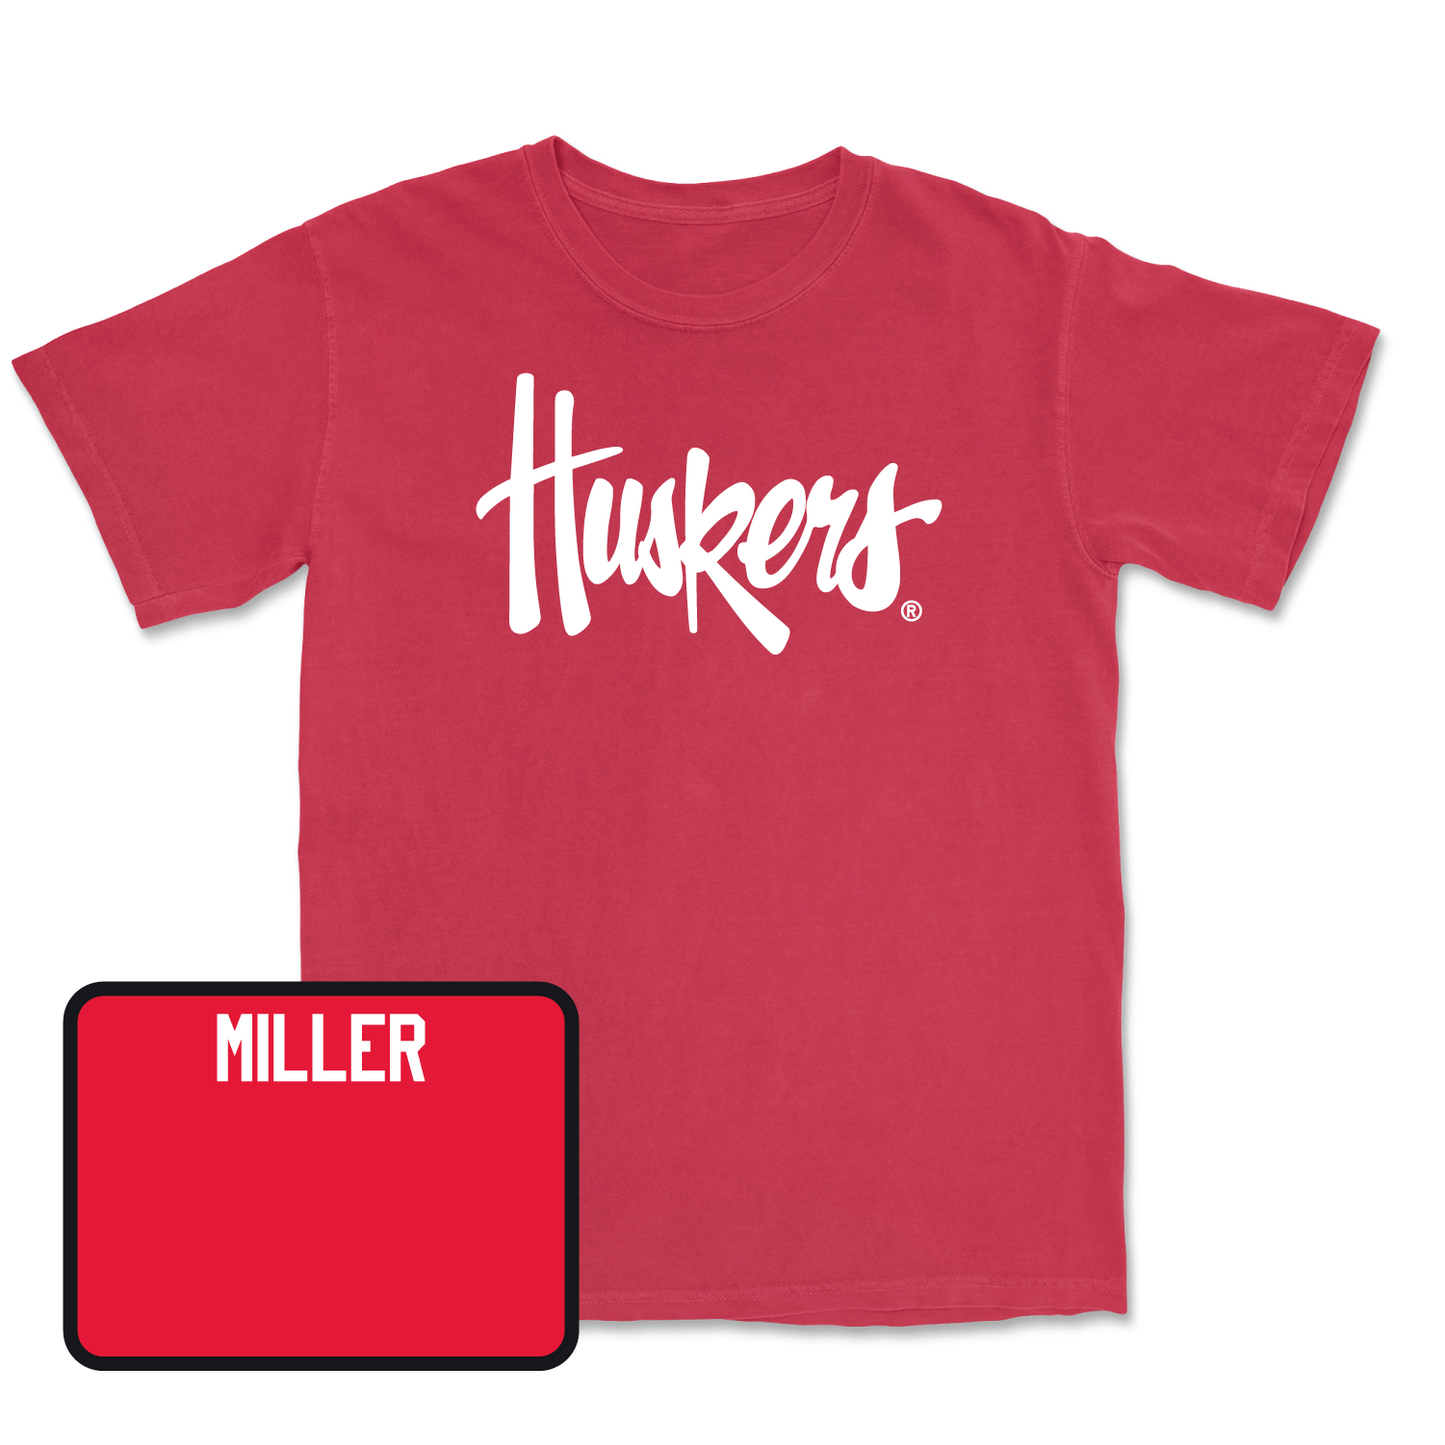 Red Track & Field Huskers Tee Medium / Brooklyn Miller